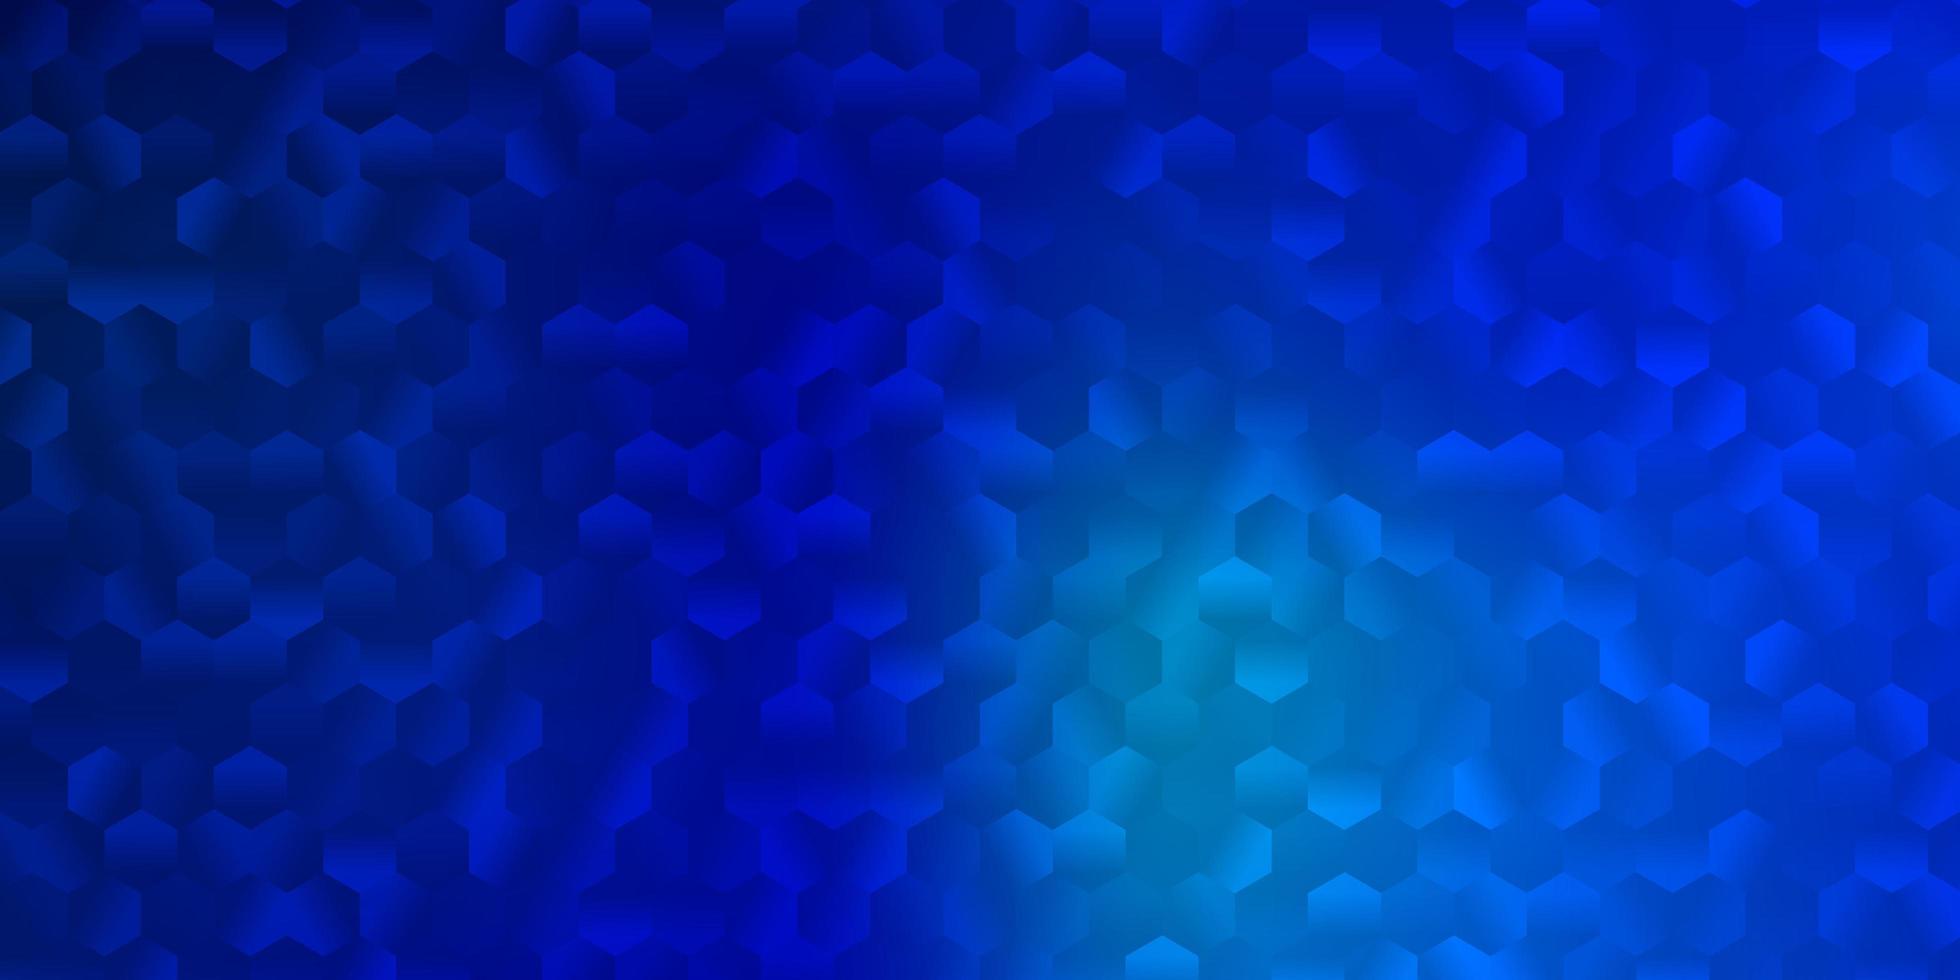 modelo de vetor azul claro em estilo hexagonal.